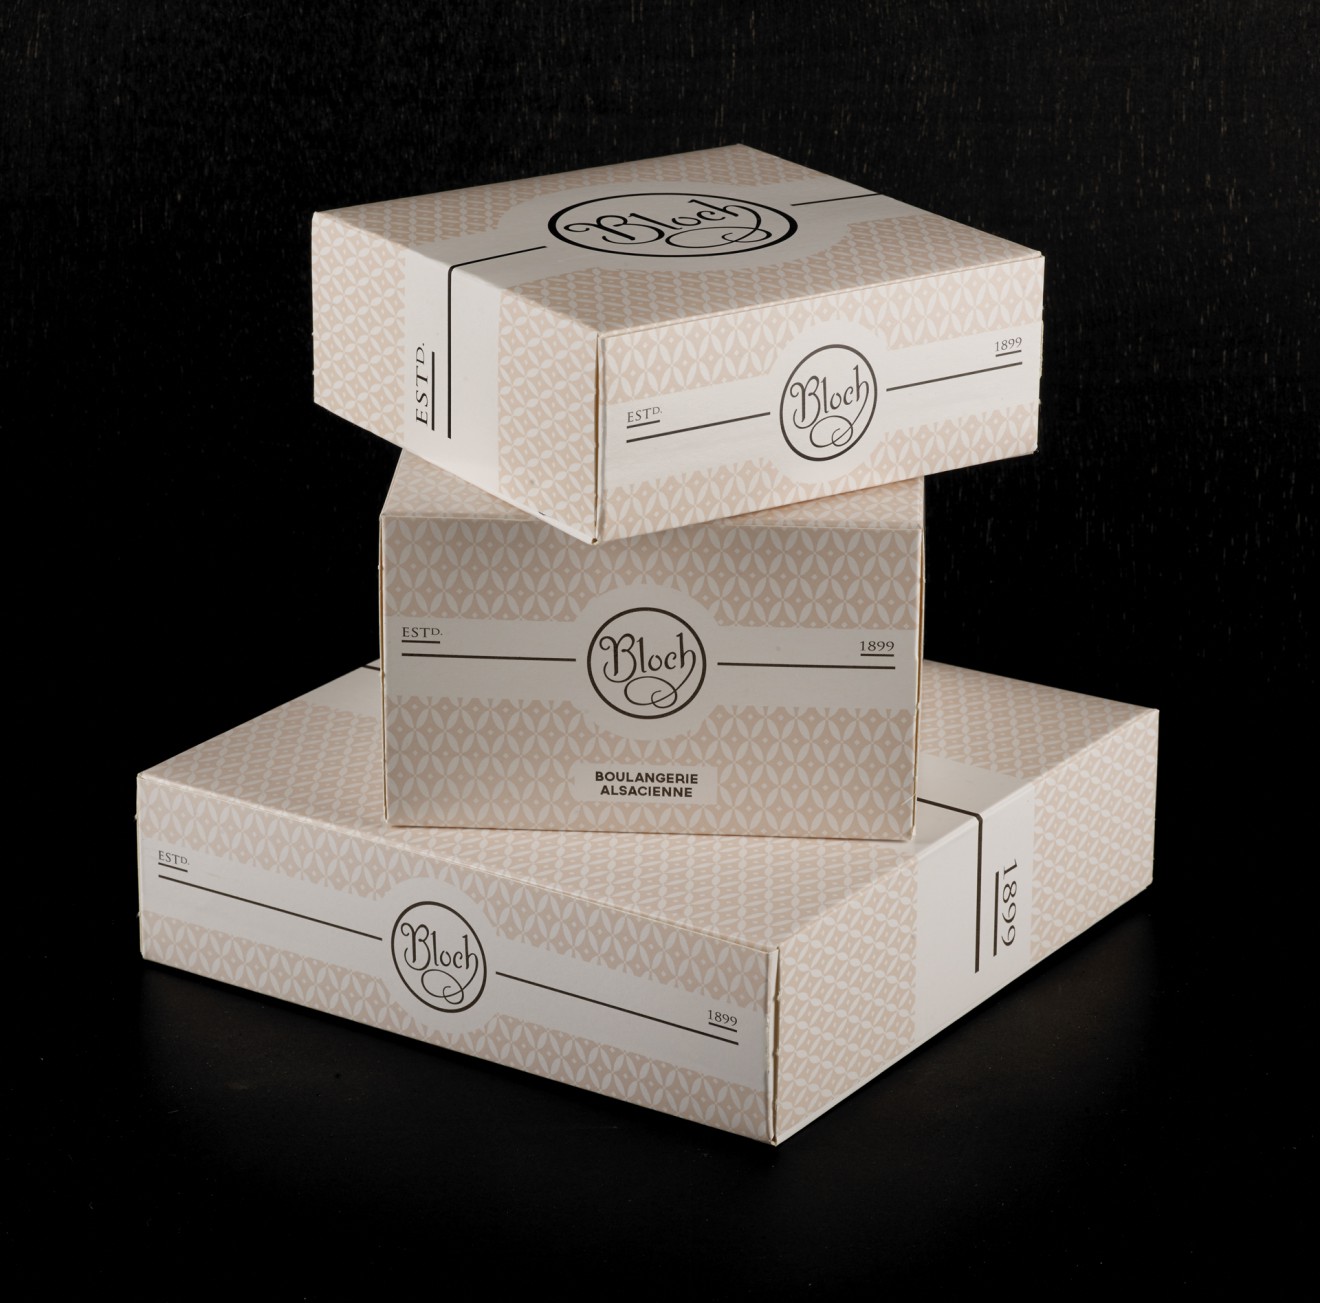 Quatre Mains package design - packaging, boxes, bloch